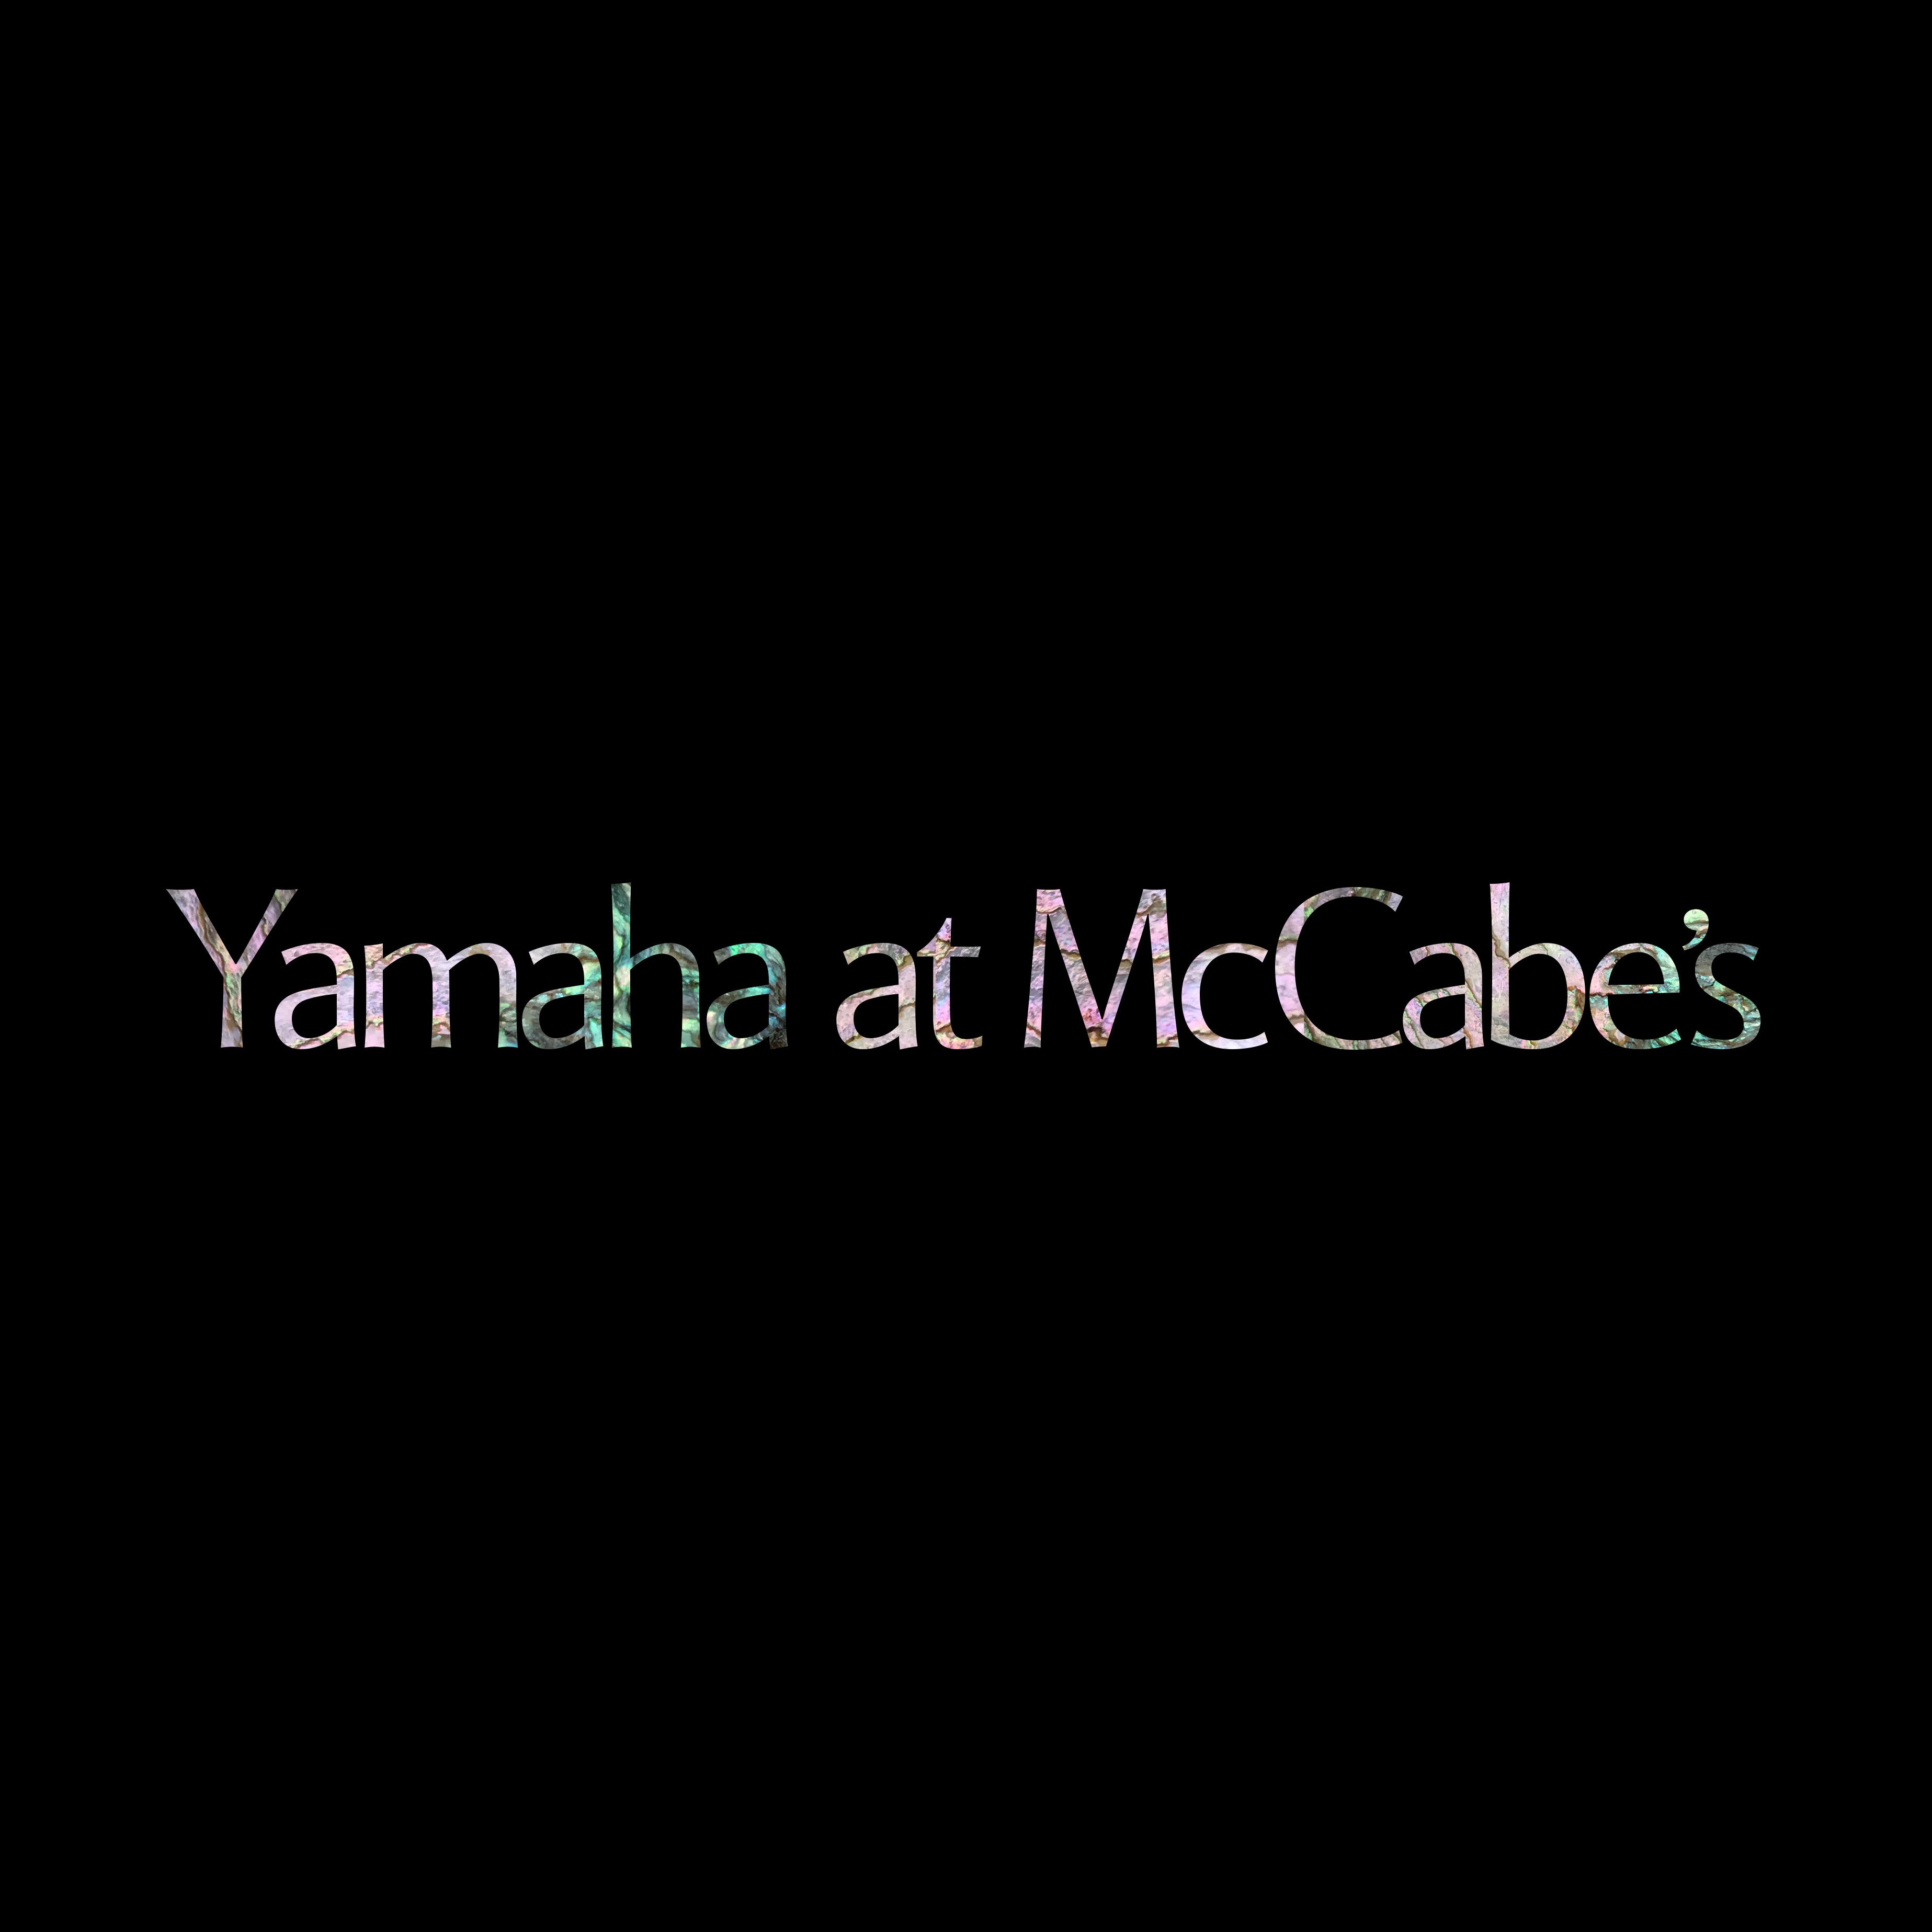 Yamaha at McCabe's